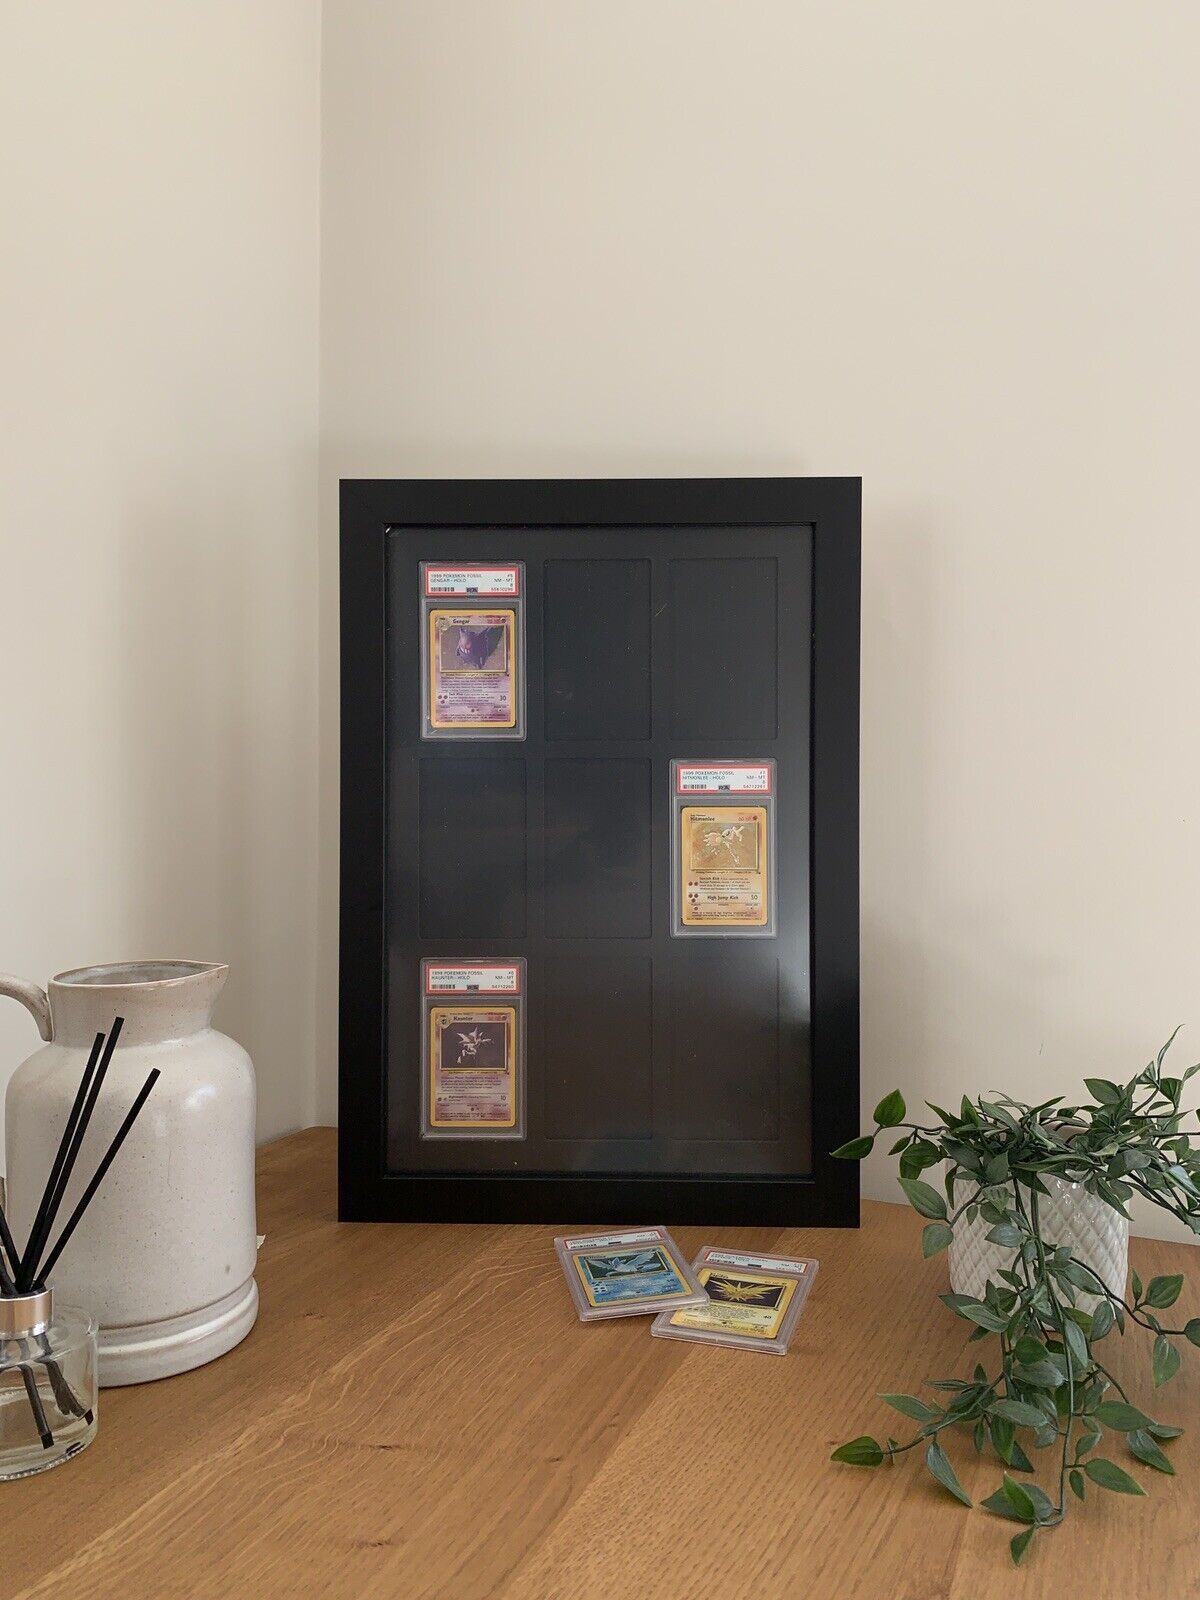 Framed Display for 9 Graded Cards - Sports, TCG, Pokemon, etc. ✨